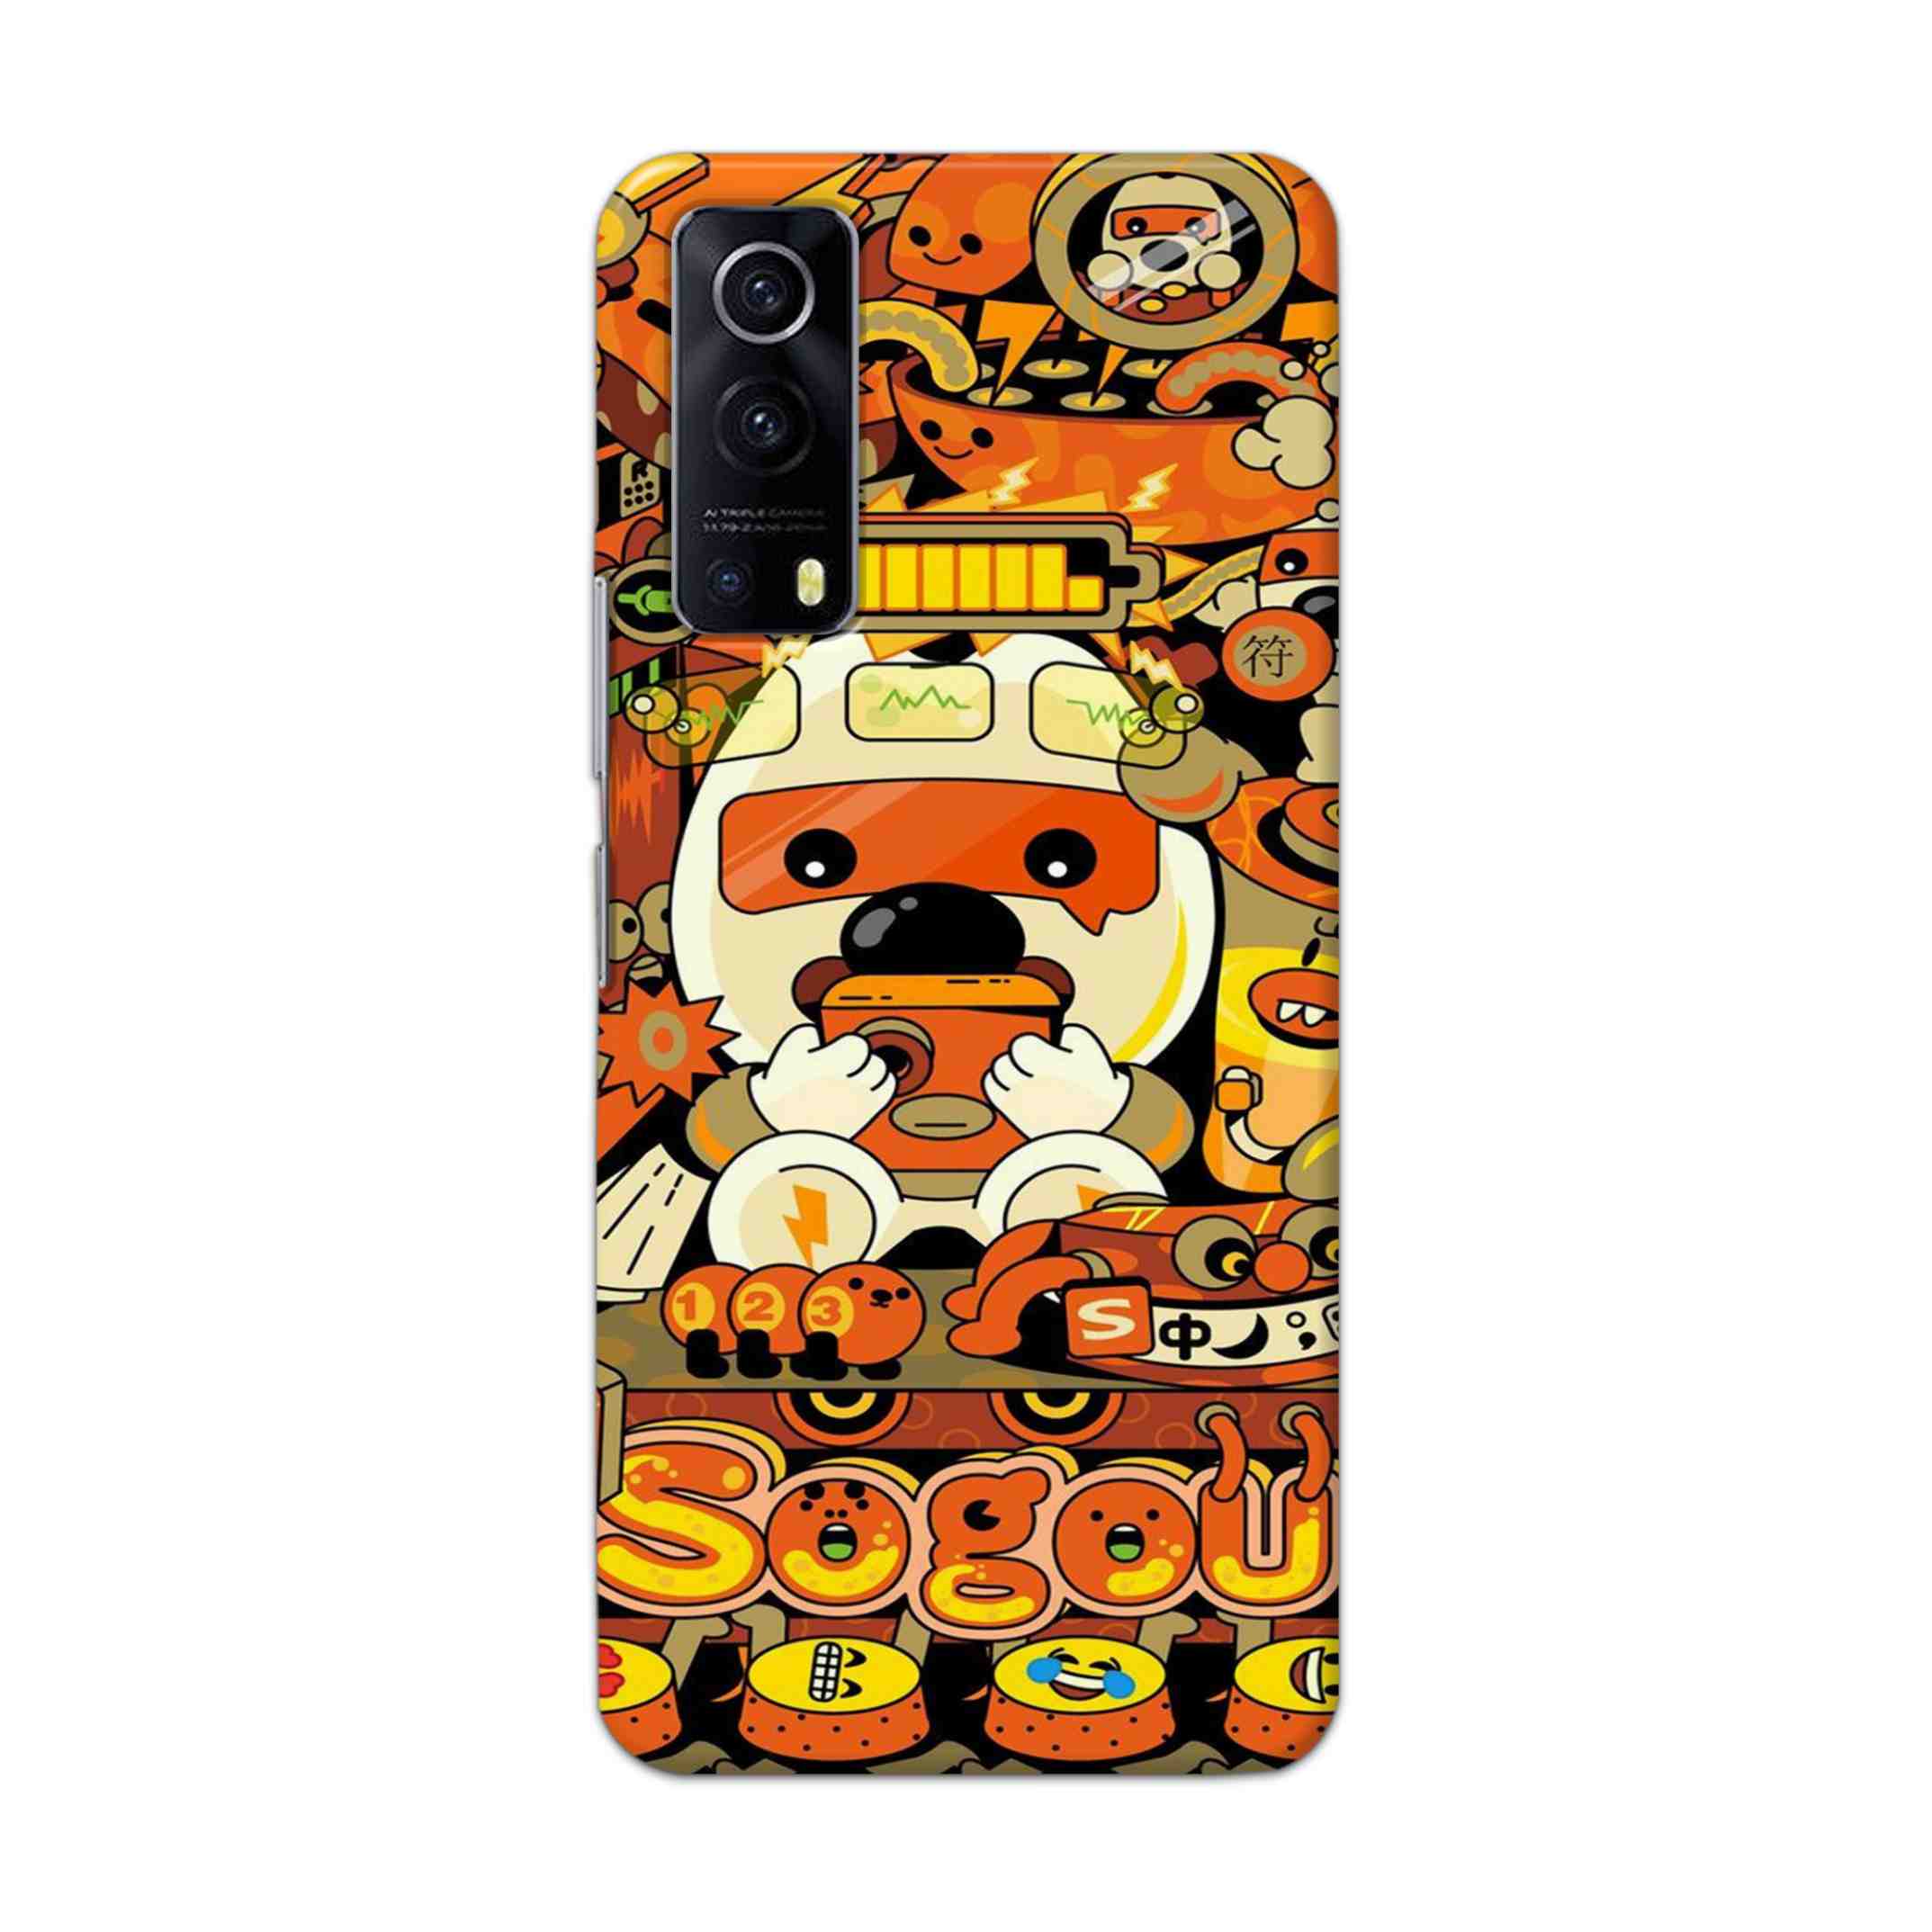 Buy Sogou Hard Back Mobile Phone Case Cover For Vivo IQOO Z3 Online